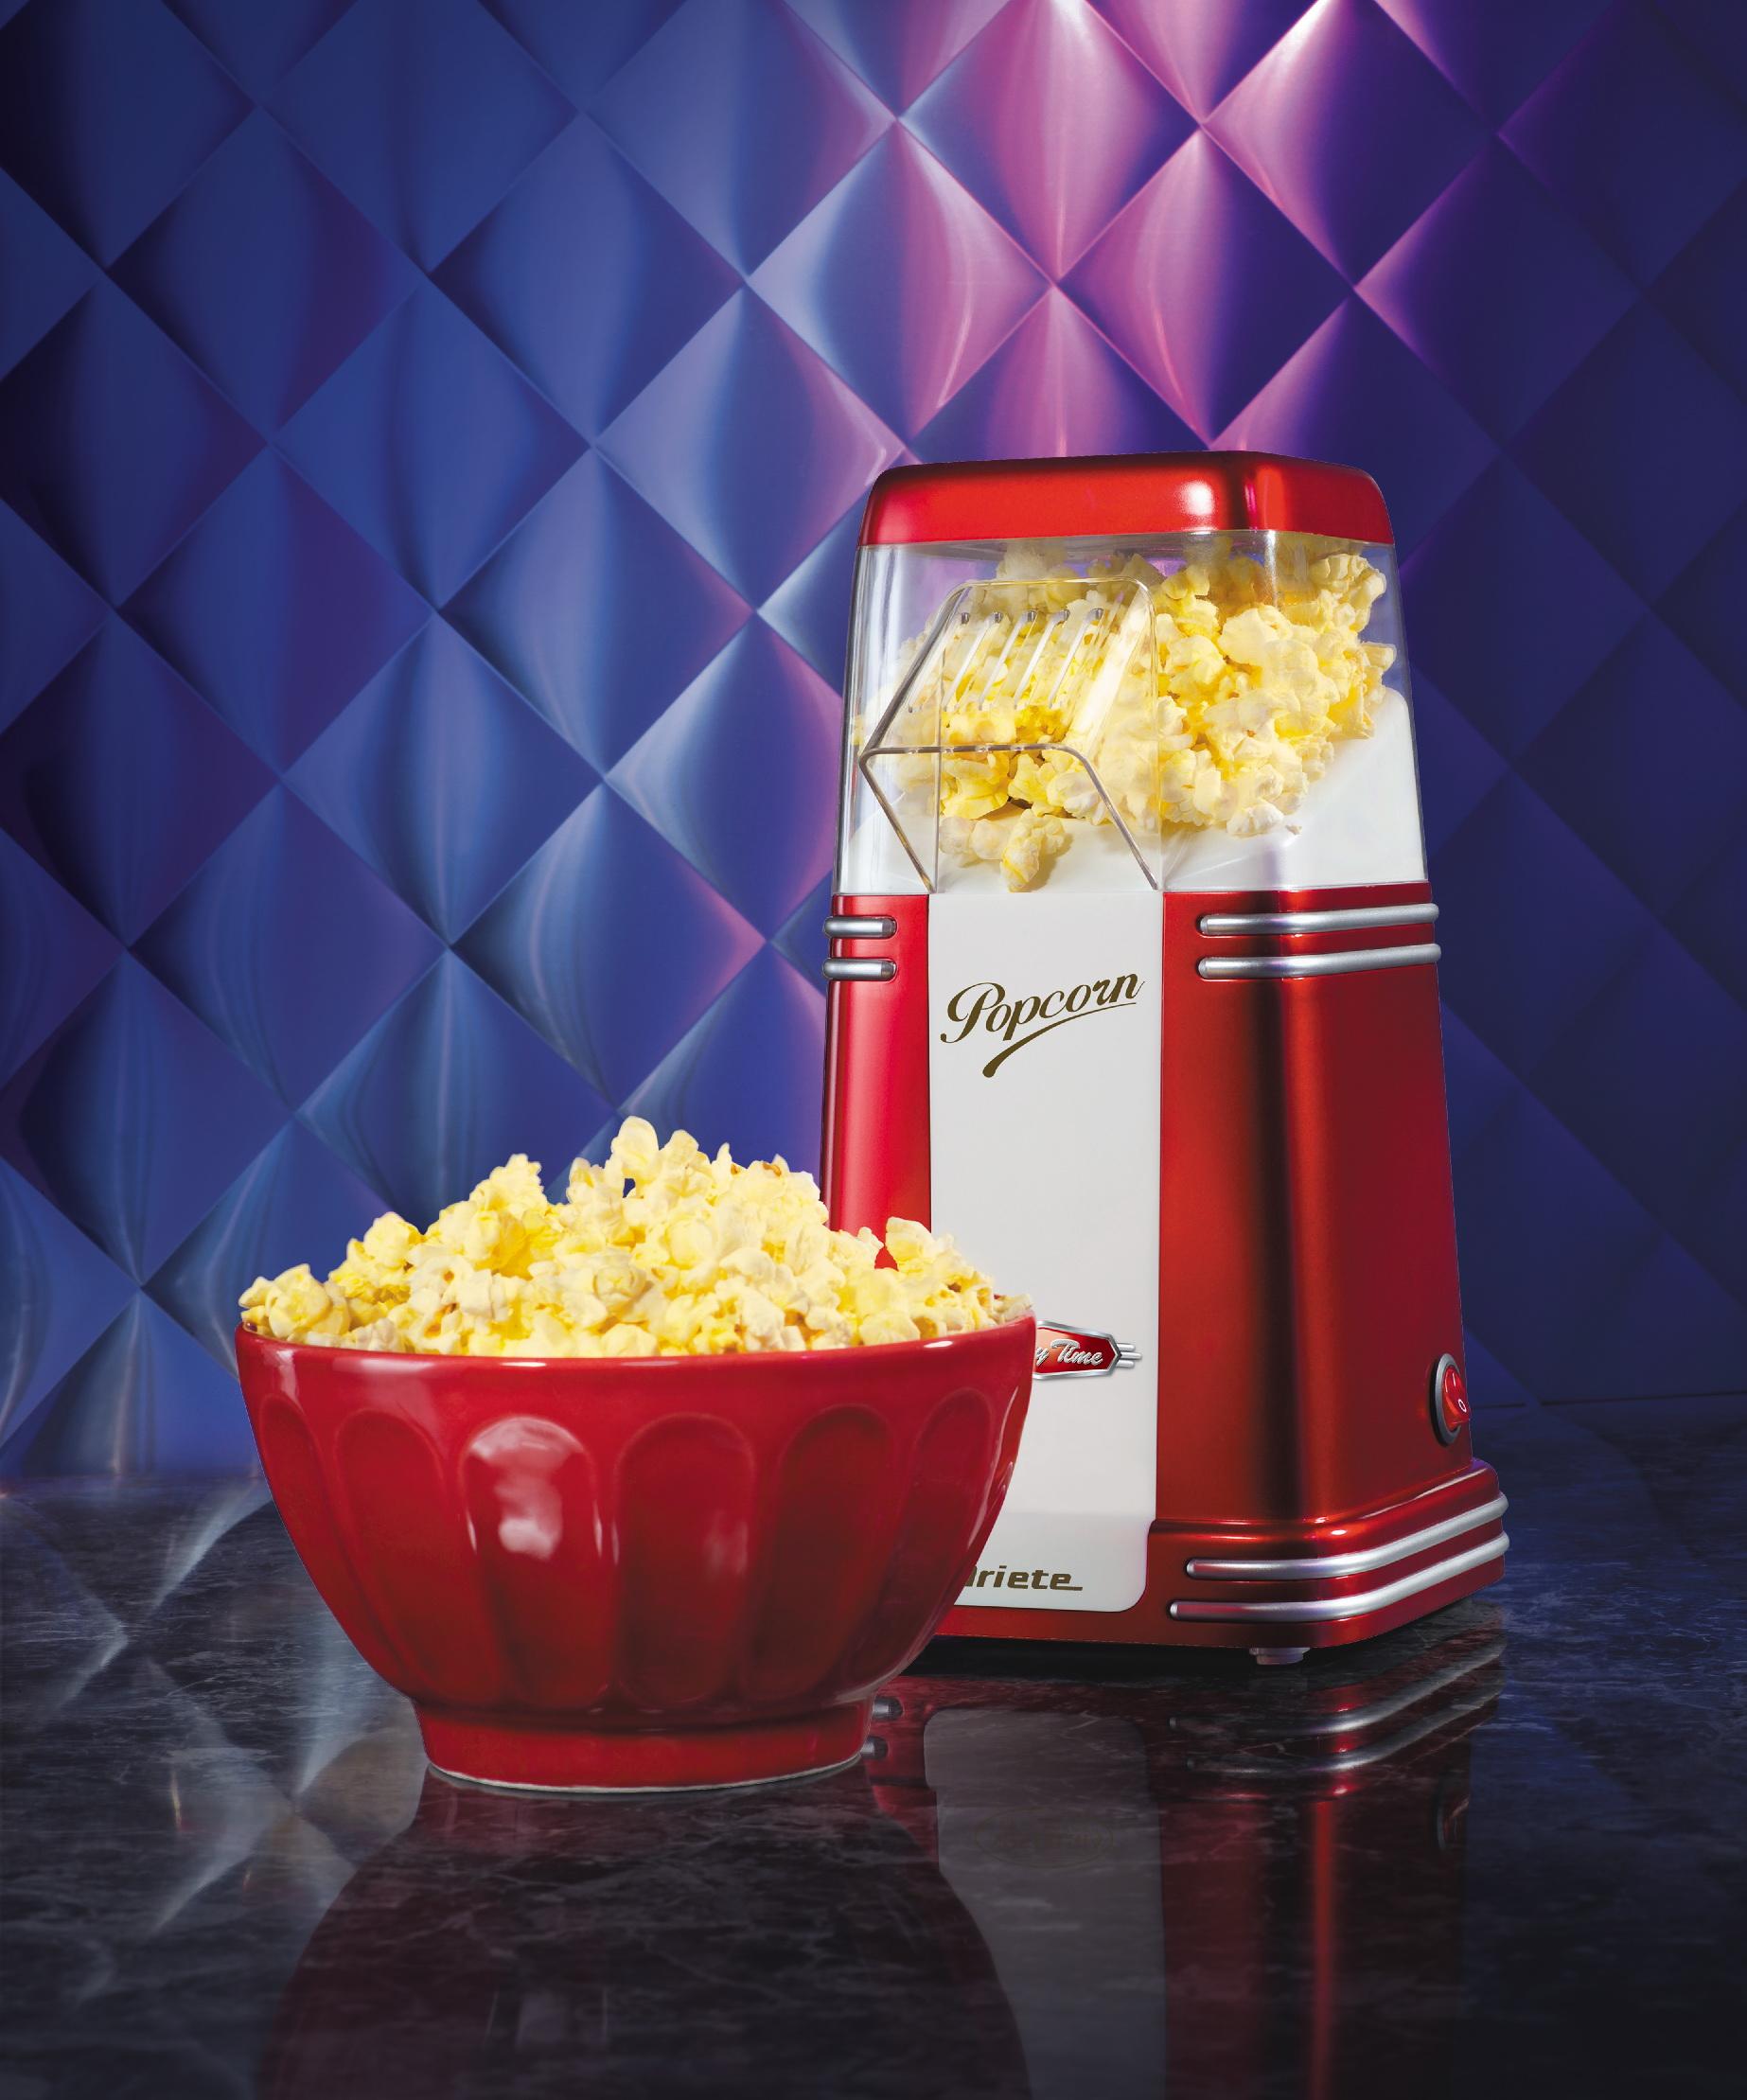 https://www.220stores.com/resize/Shared/Images/Product/Ariete-Italian-Original-220-Volt-Popcorn-Maker/ariete-popcorn-popper-2952-dettaglio01.jpg?